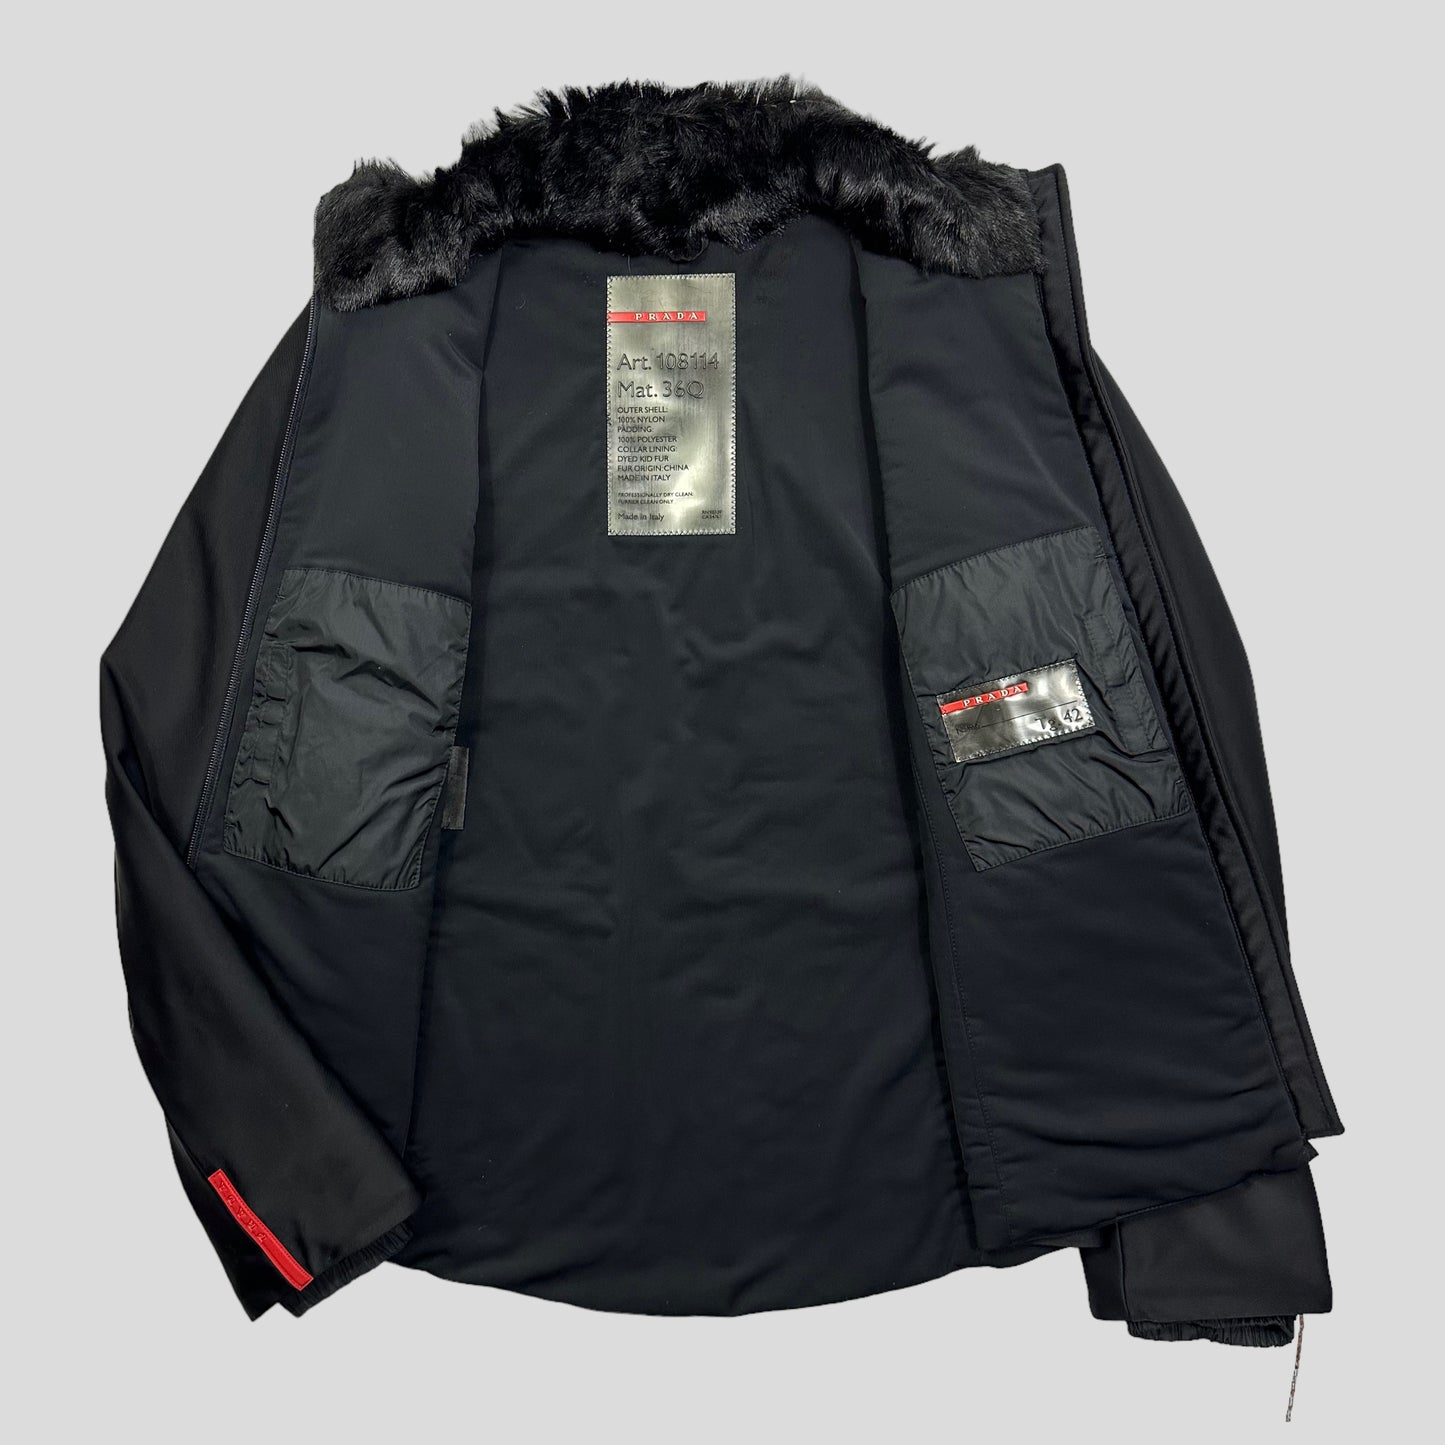 Prada Sport AW00 Goat Fur Collared Ski Jacket - IT42